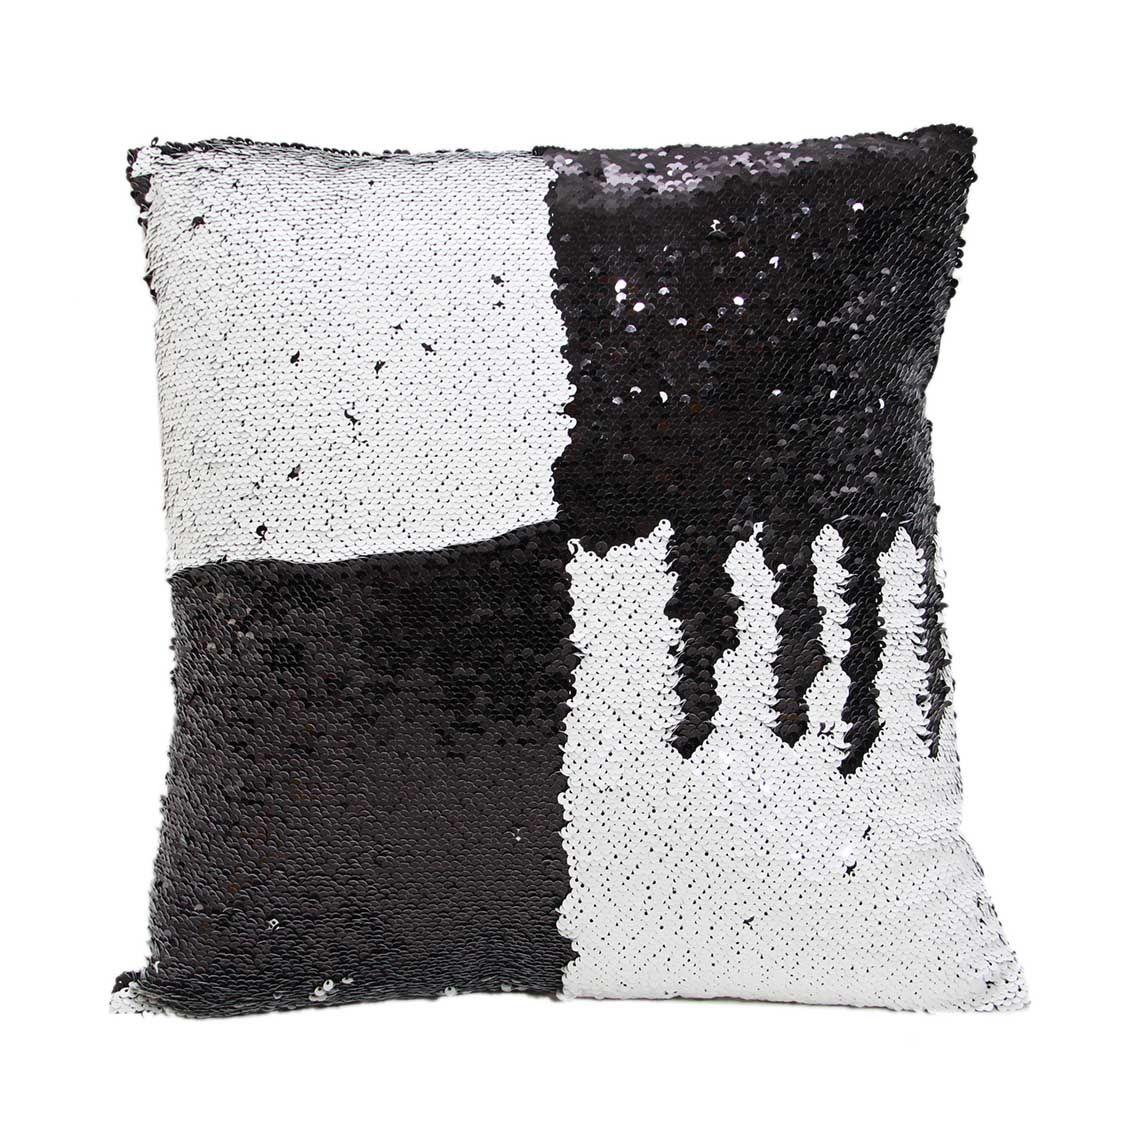 Black and Wight Mermaid Logo - Black White Mermaid Pillow – Mermaid Pillows